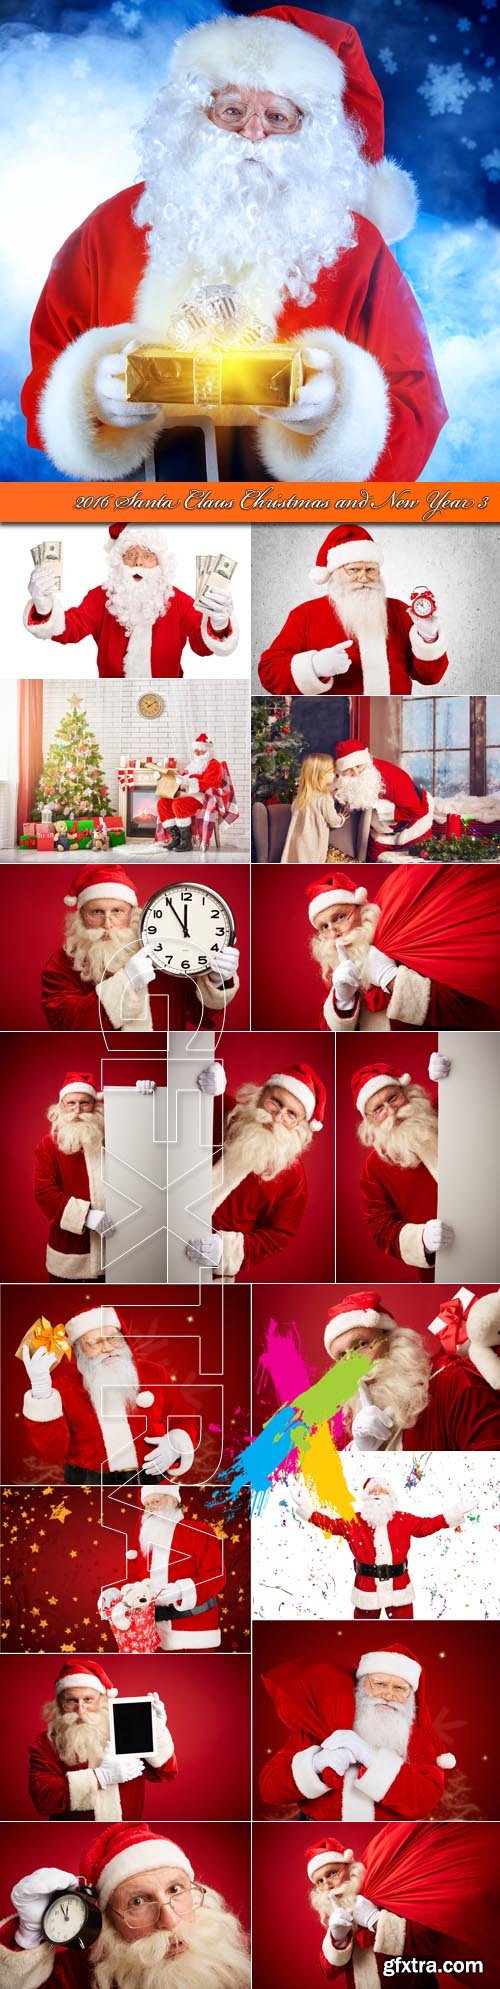 2016 Santa Claus Christmas and New Year 3 - Stock Photo